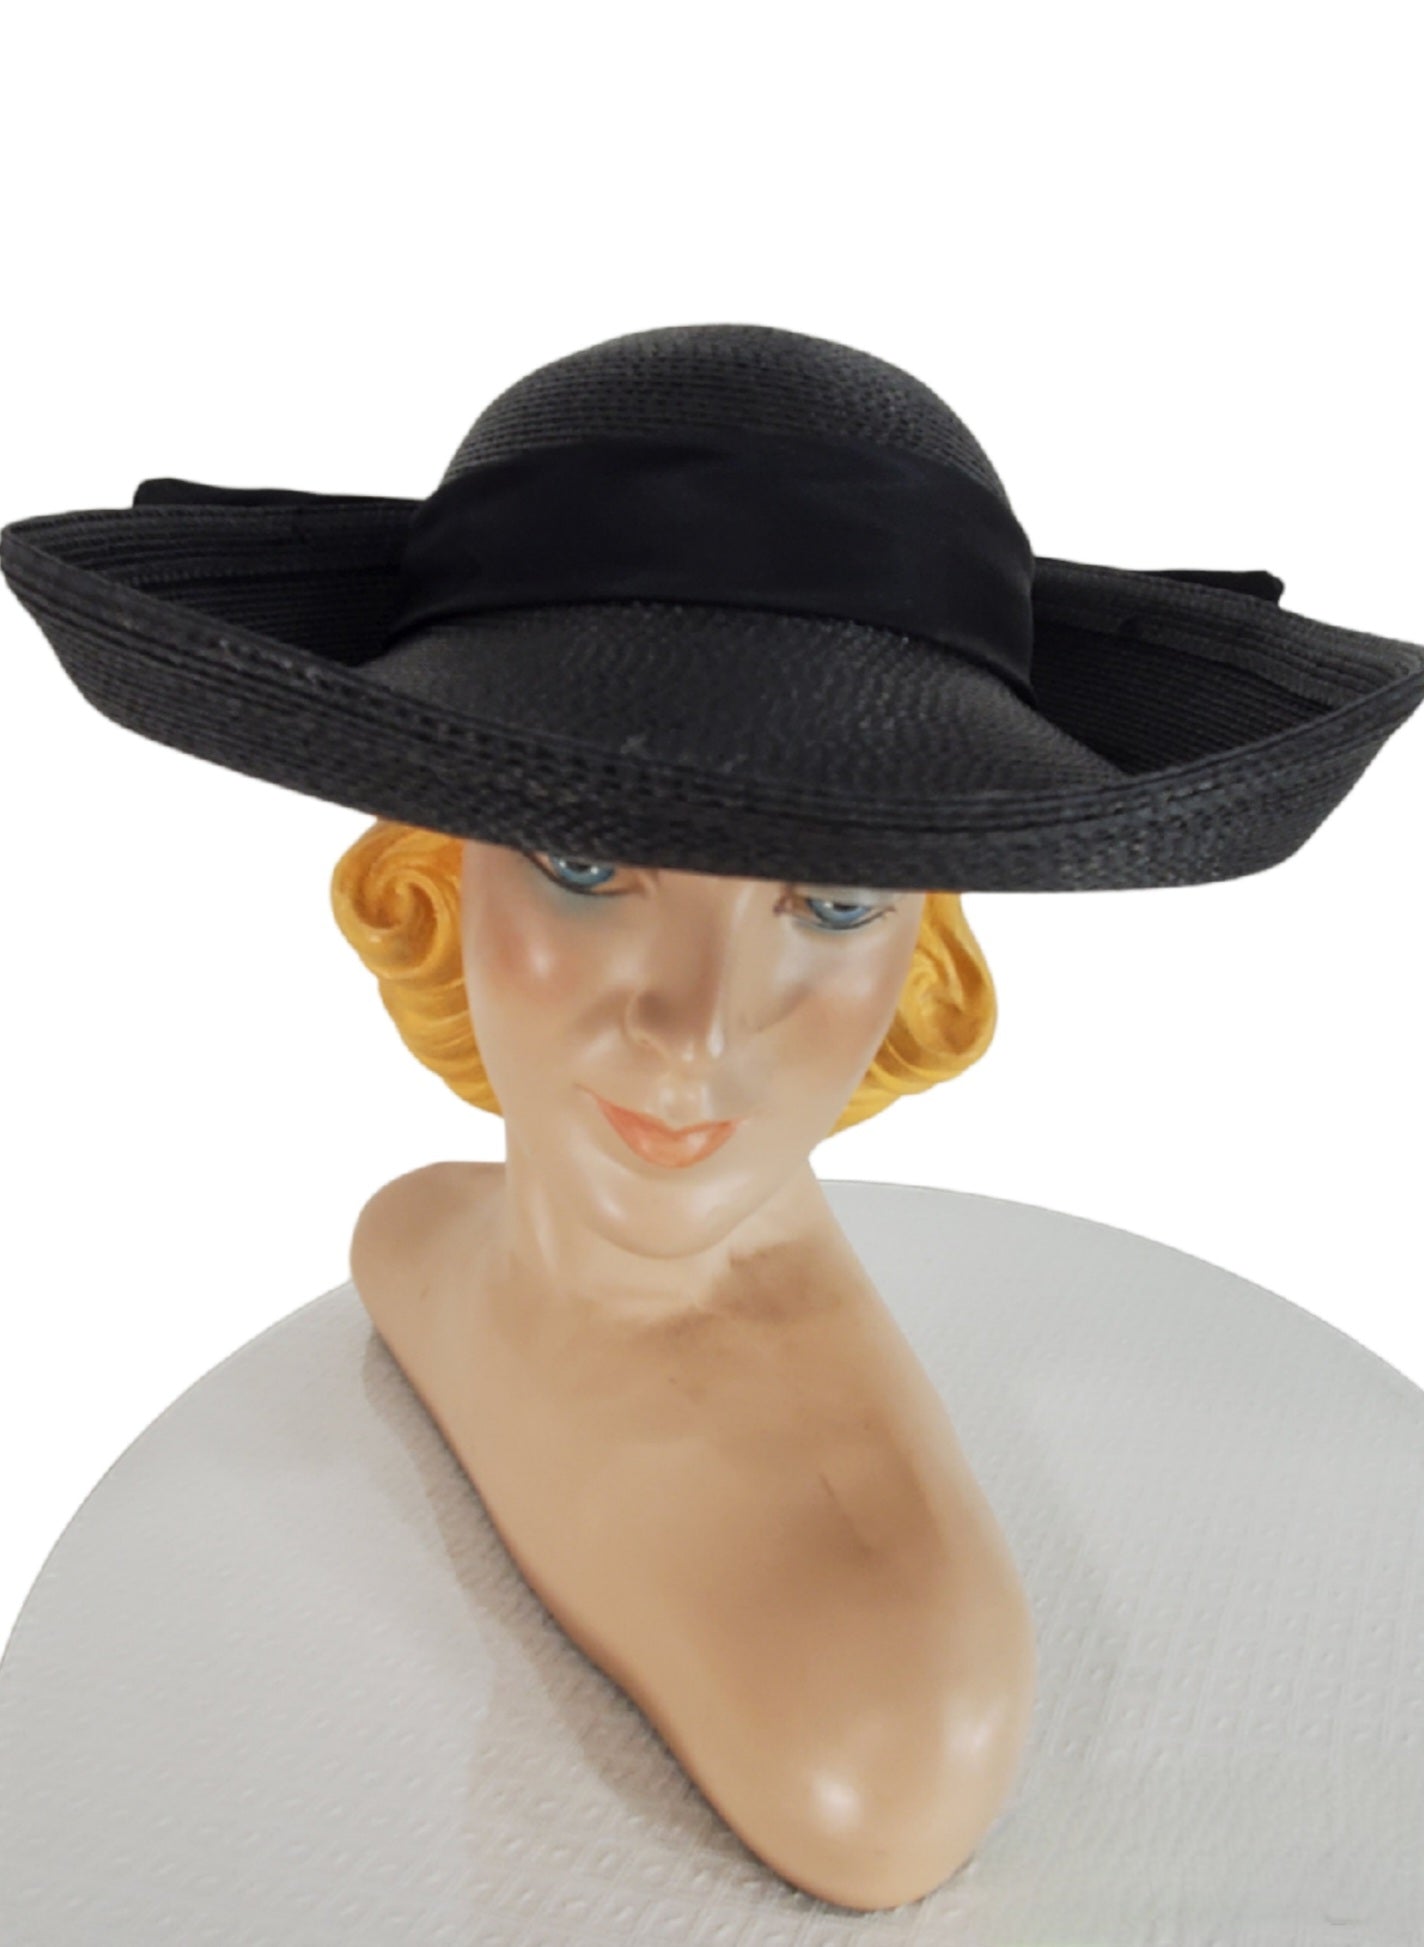 Yves Saint Laurent YSL Vintage Glossy Black Straw Hat, 1980s